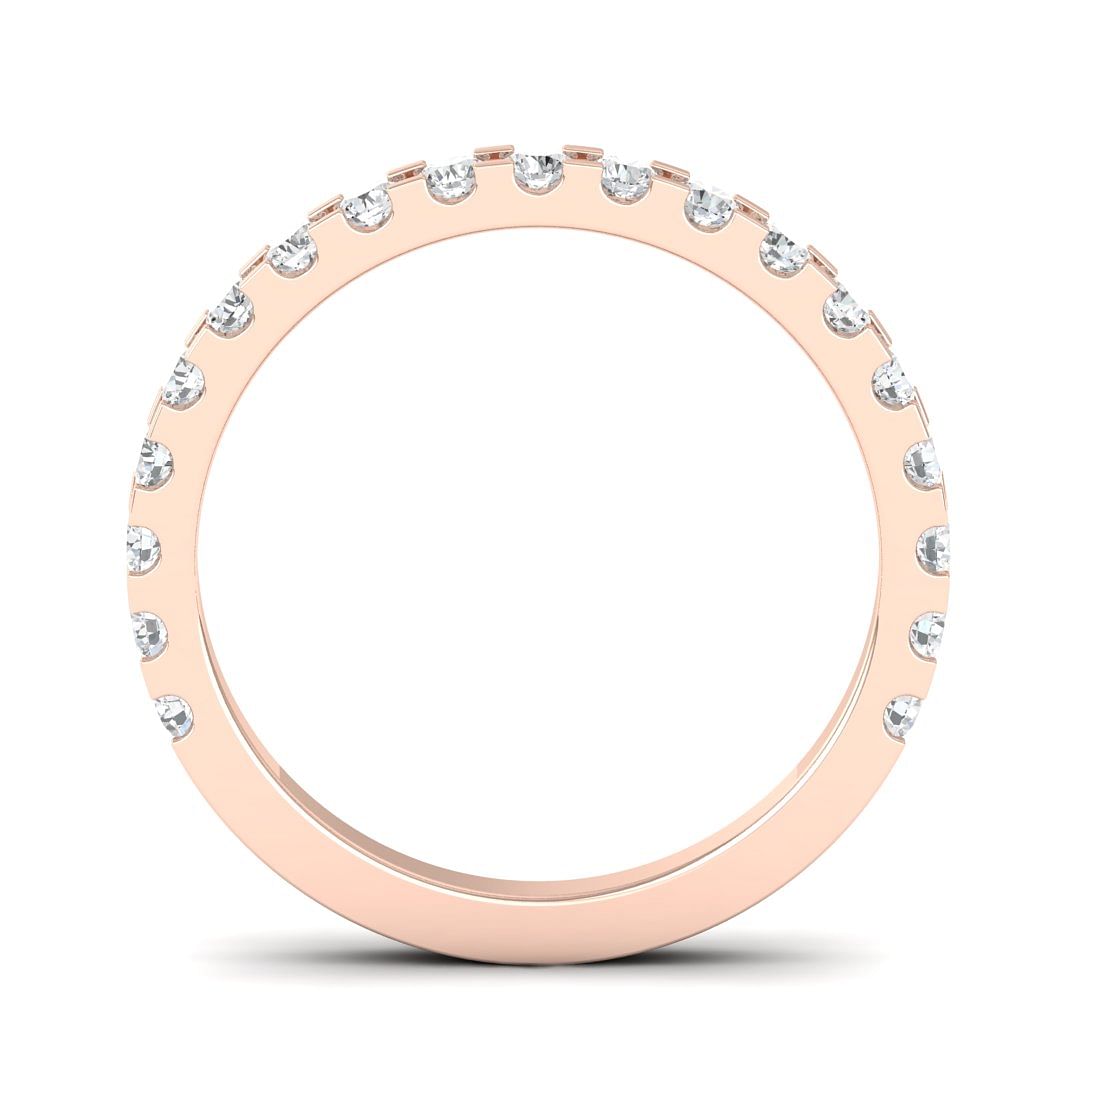 Eva Diamond Wedding Ring For Women With Rose Gold